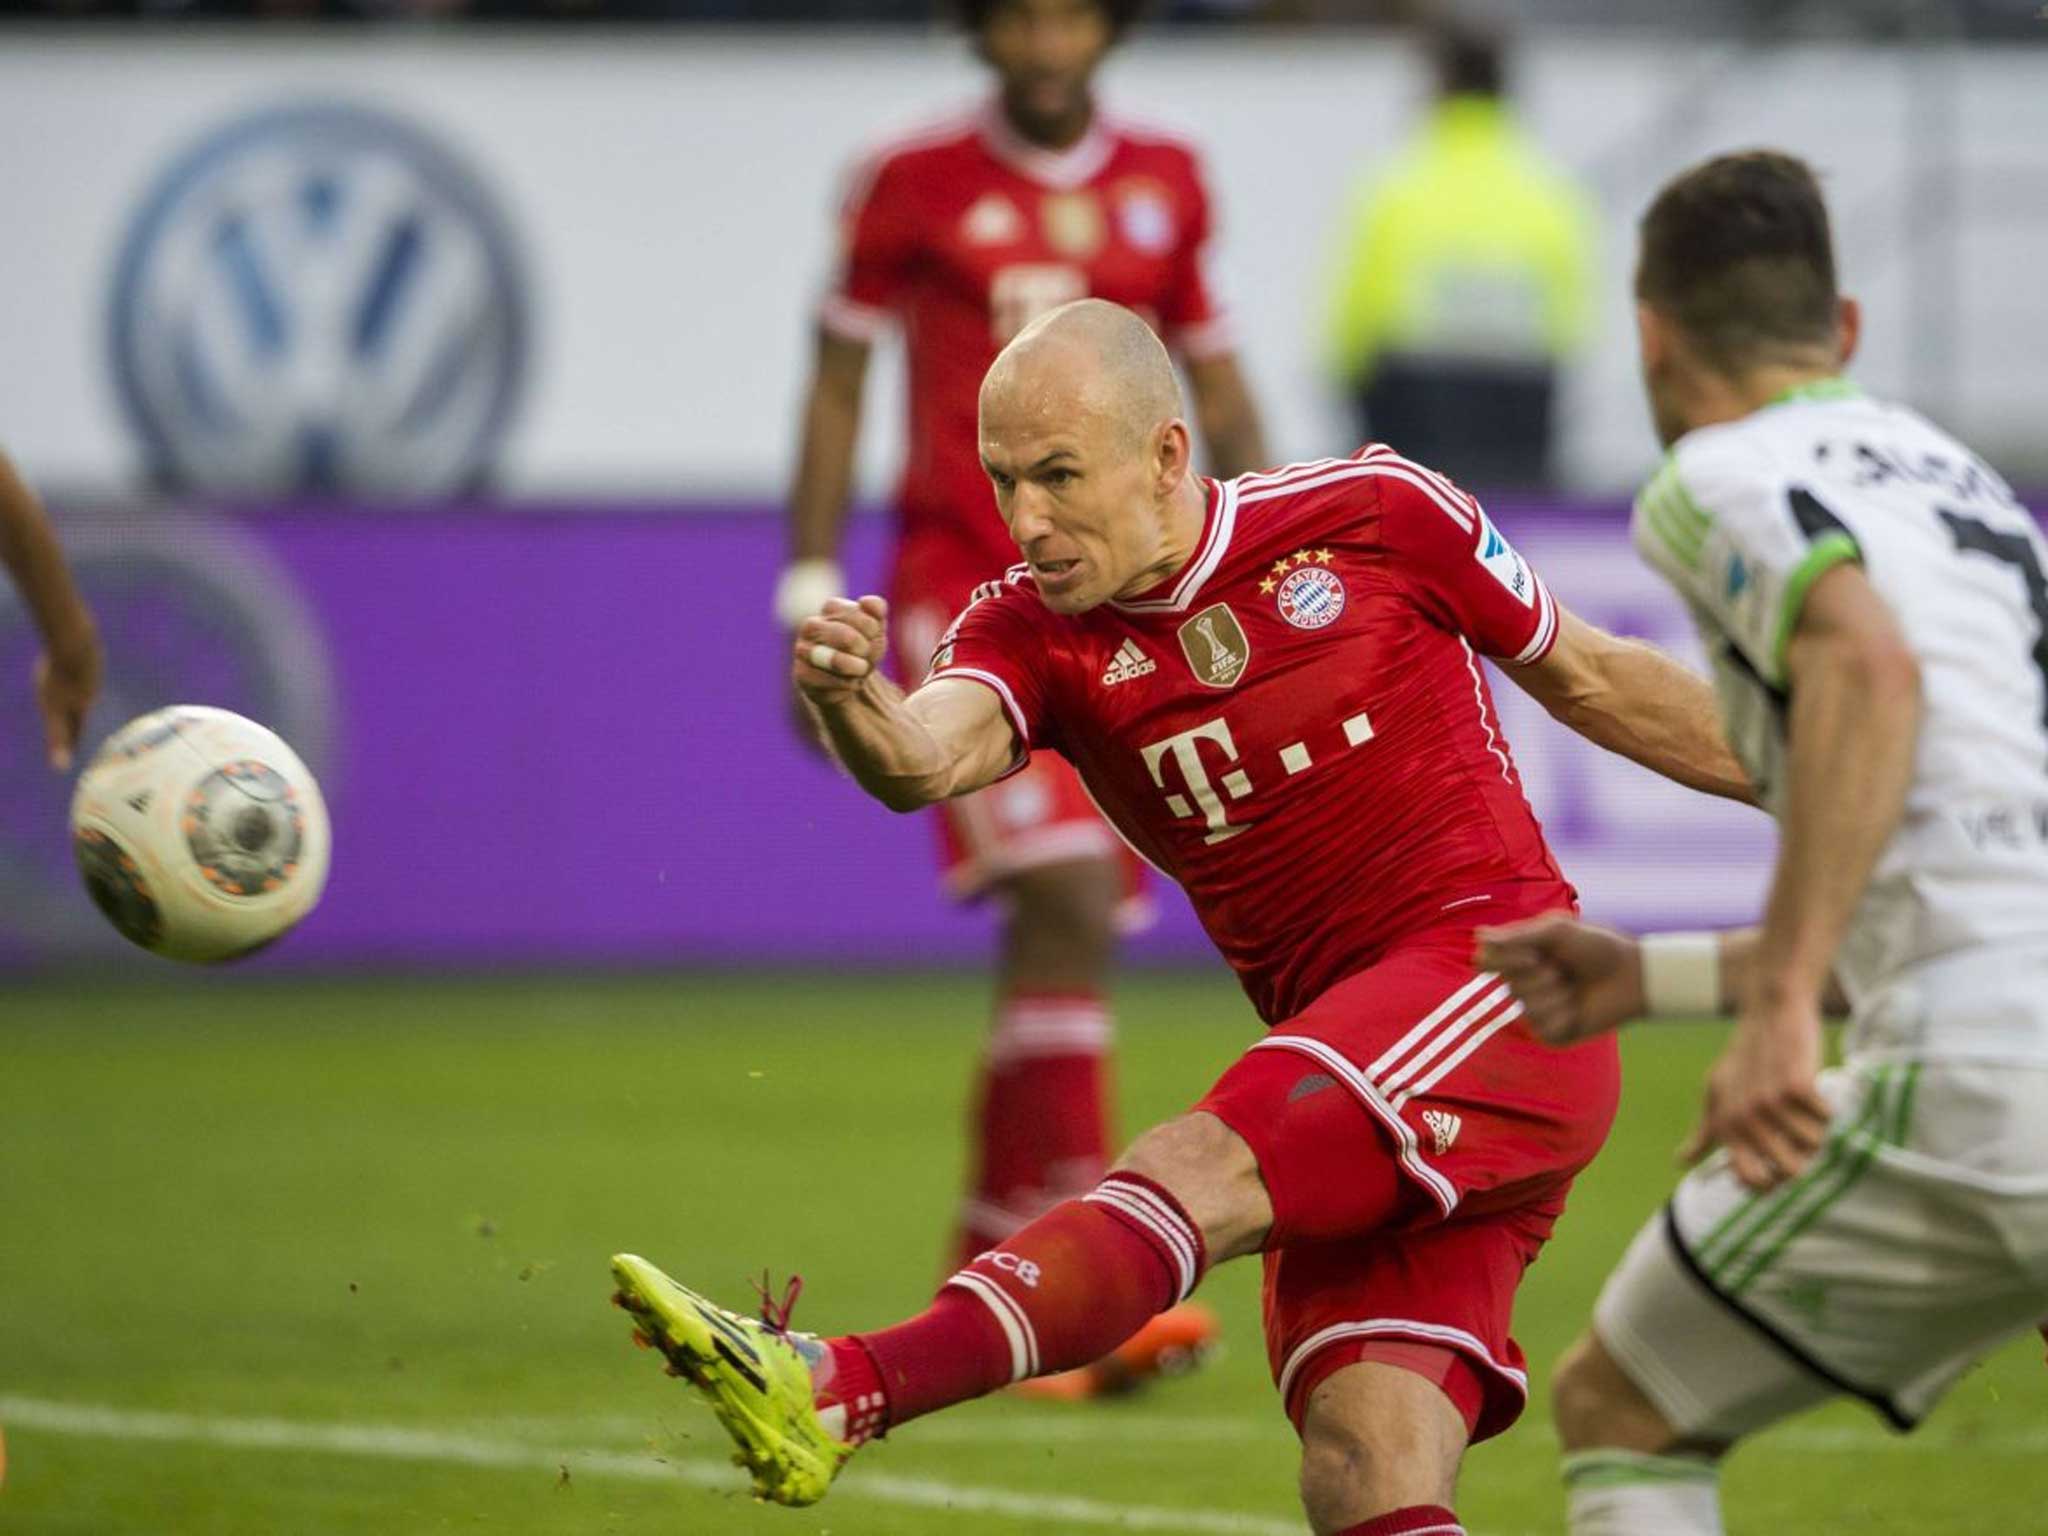 Bayern Munich's Dutch midfielder Arjen Robben shoots a goal during the German first division Bundesliga football match